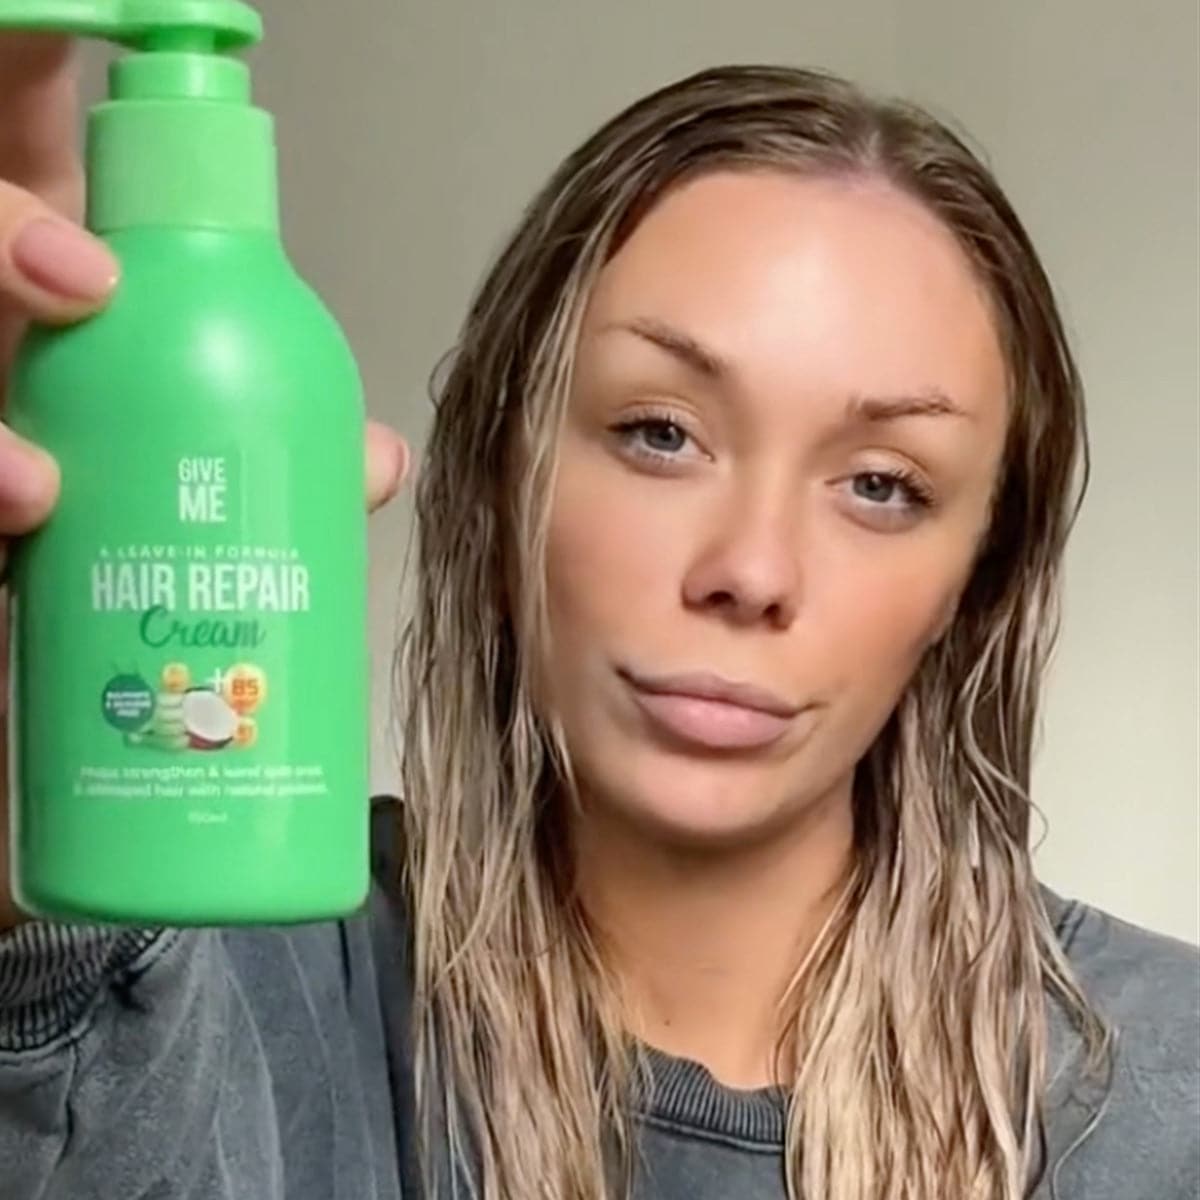 Aloe Vera & Coconut Oil Hair Repair Cream - Give Me Cosmetics